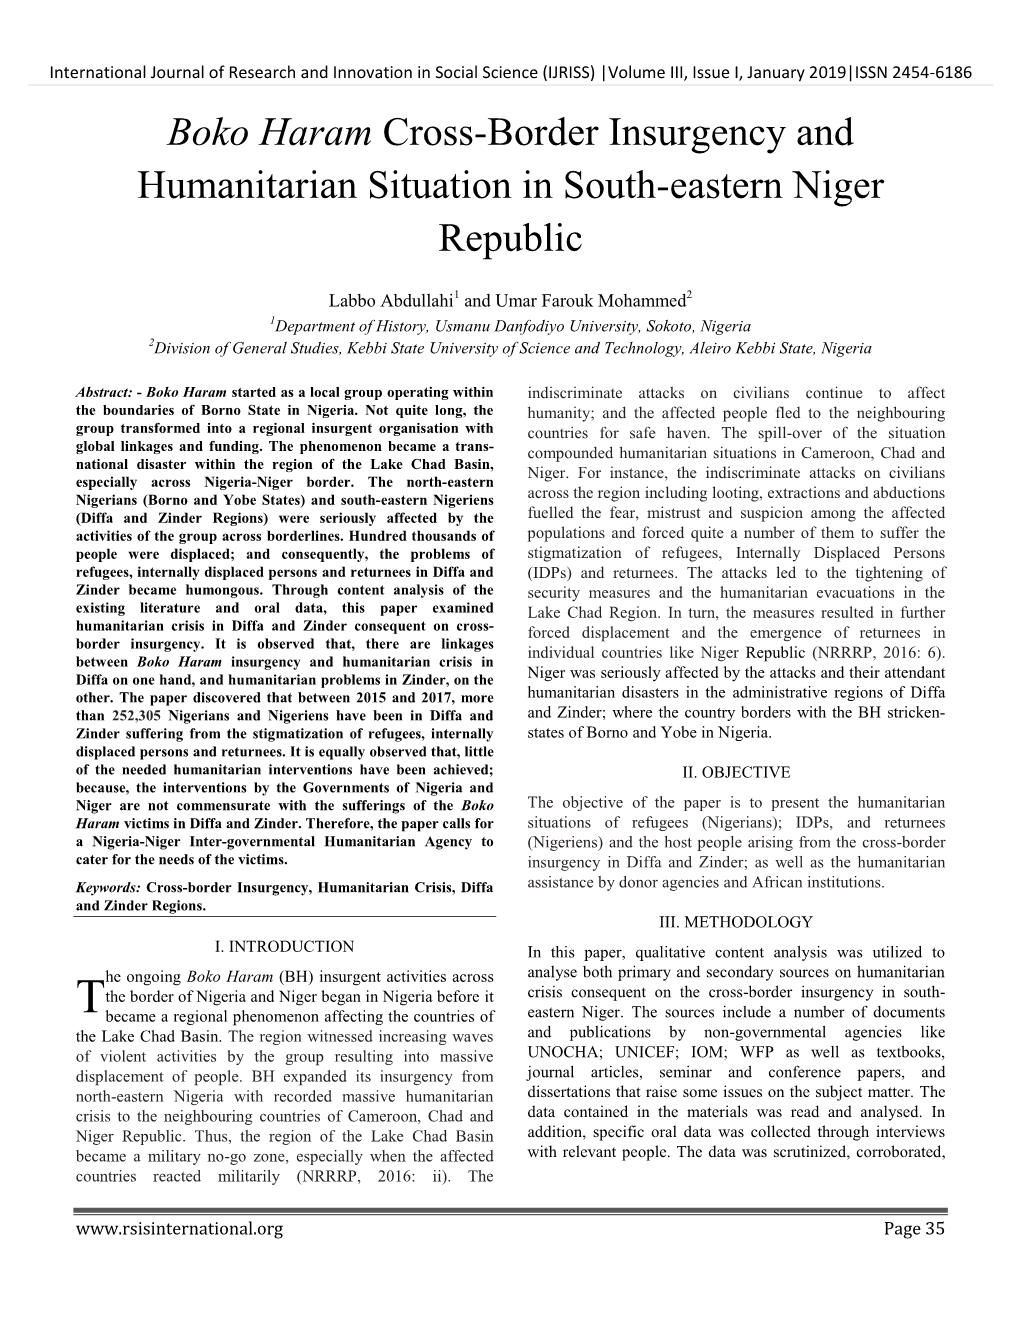 Boko Haram Cross-Border Insurgency and Humanitarian Situation in South-Eastern Niger Republic